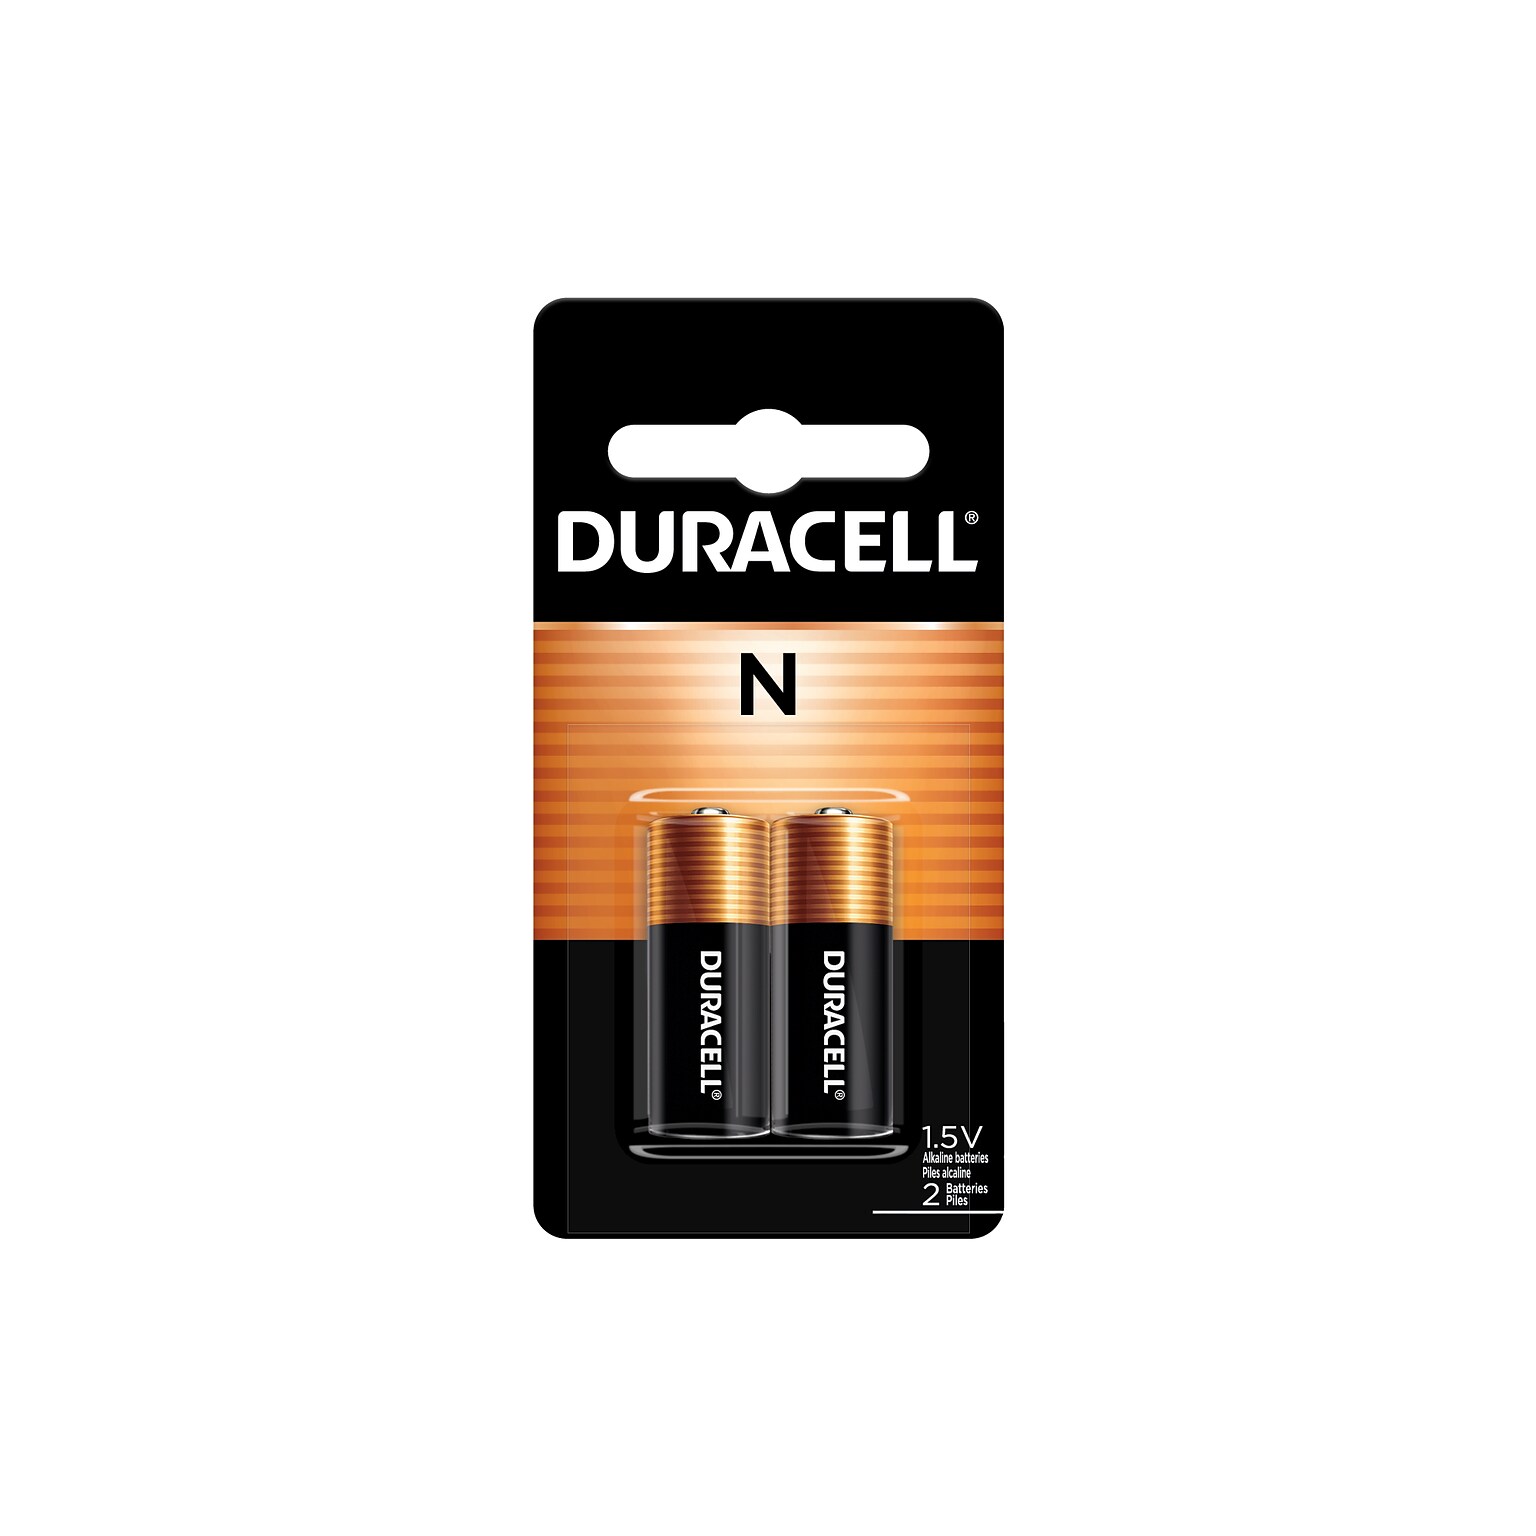 Duracell MN Alkaline Battery, N, 2 Pack (DURMN9100B2PK)